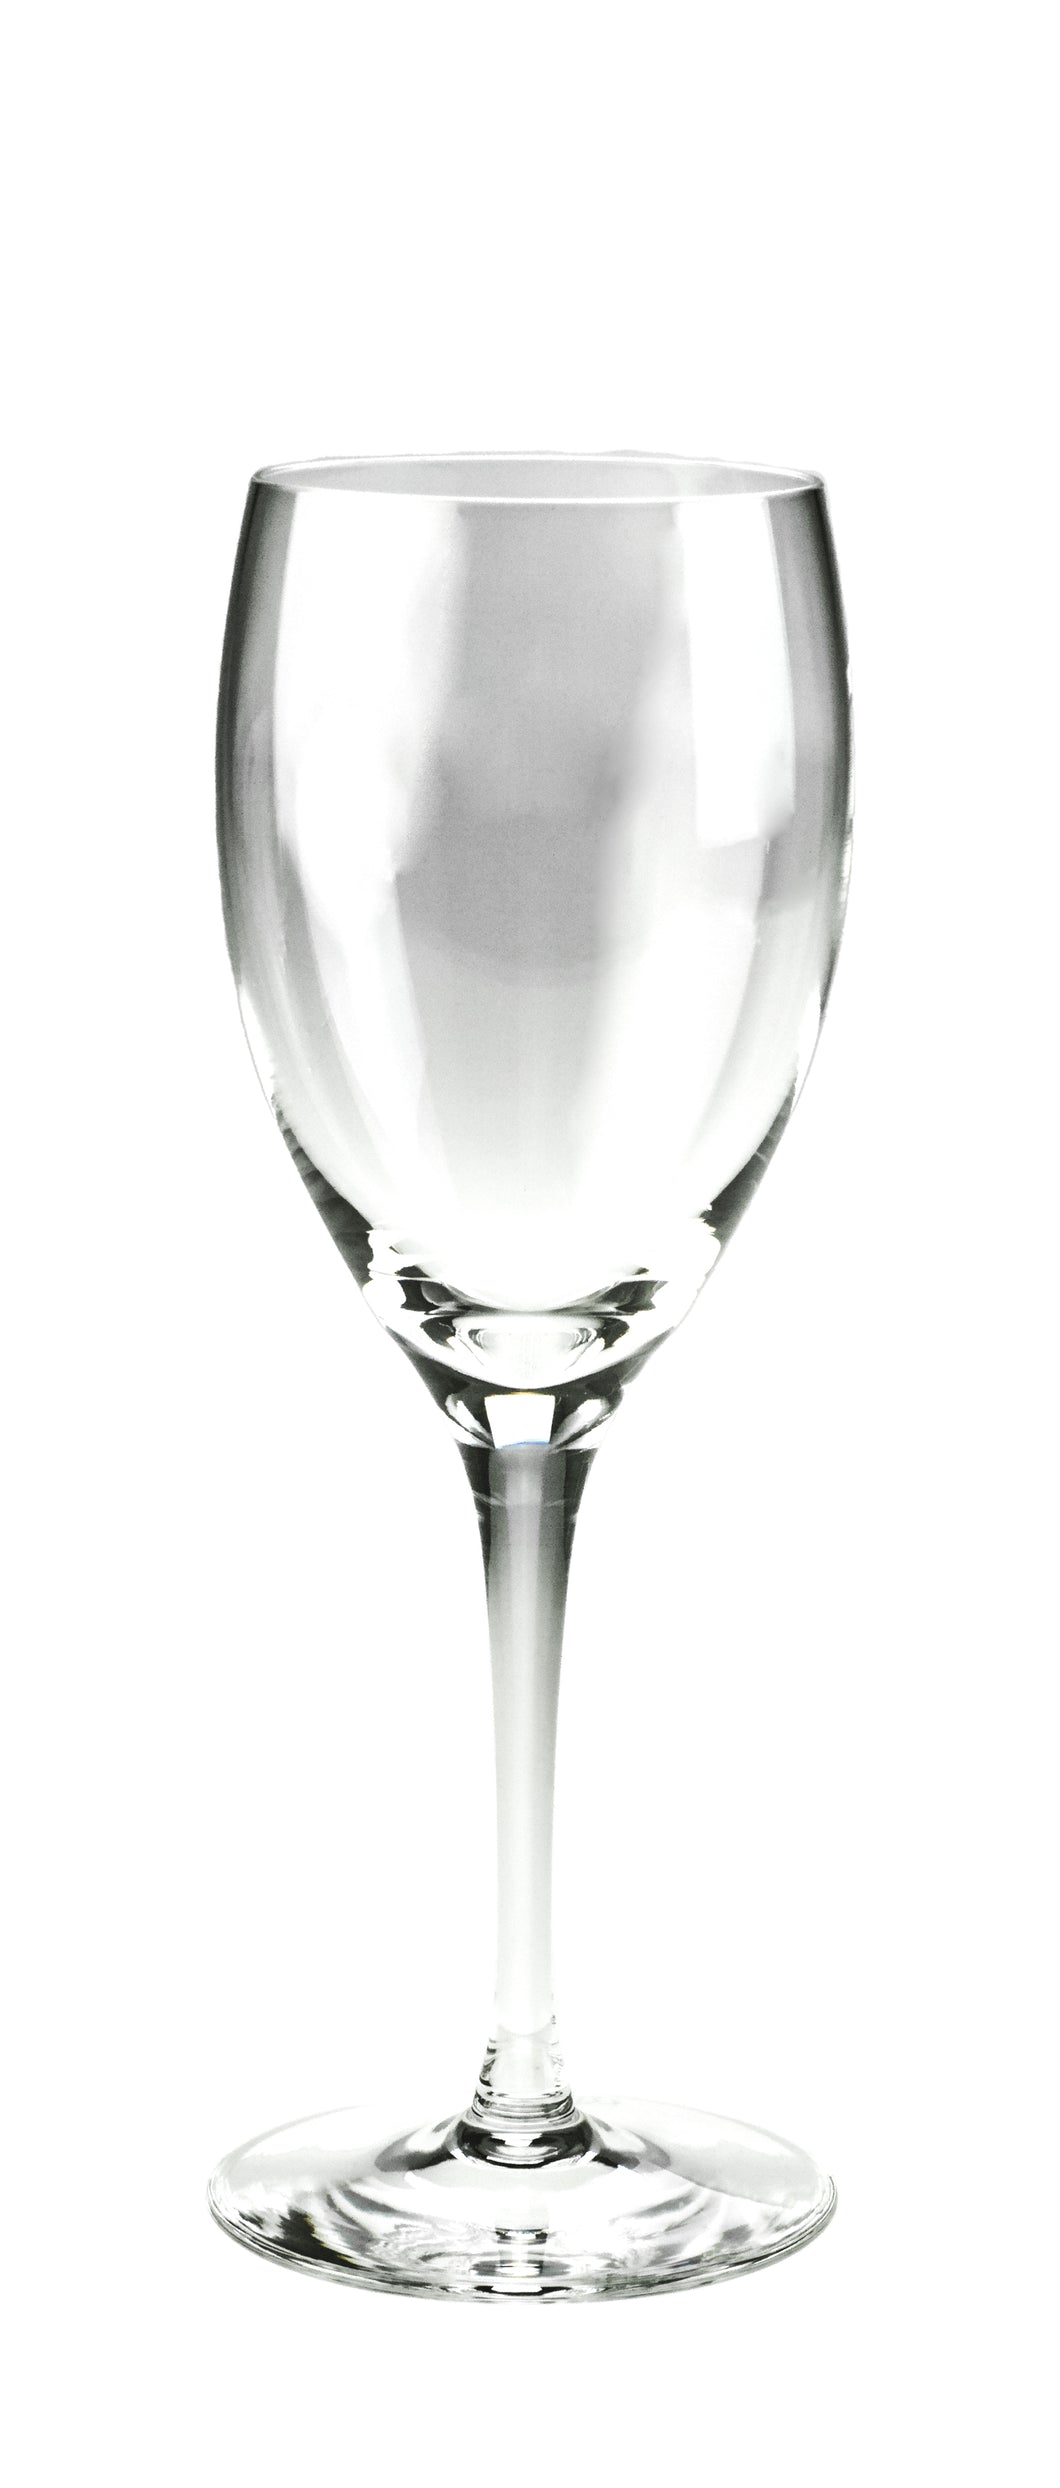 SONATE klar, glatt - Weinglas 210 mm (x)